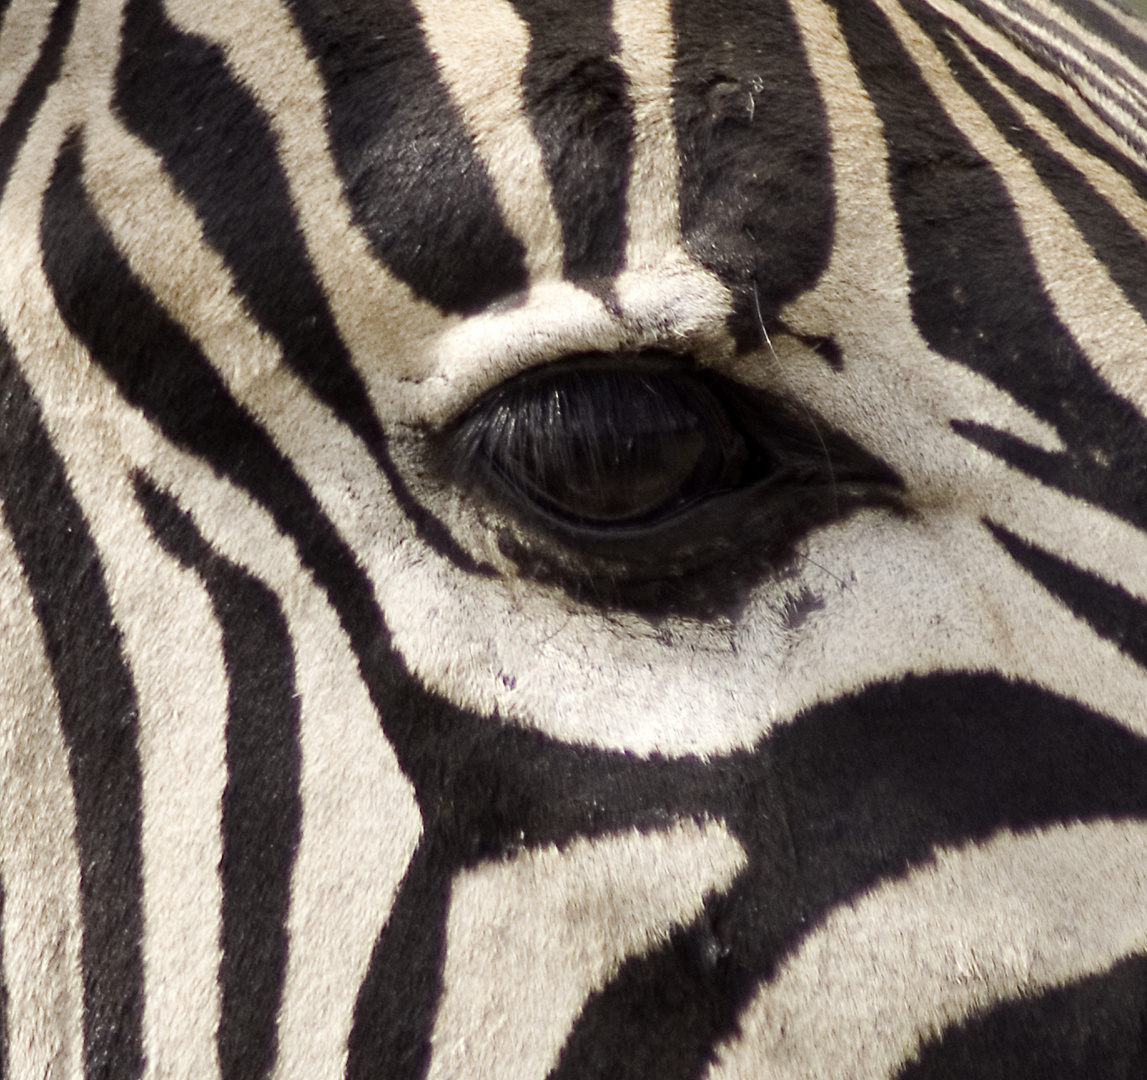 Zebra-Auge